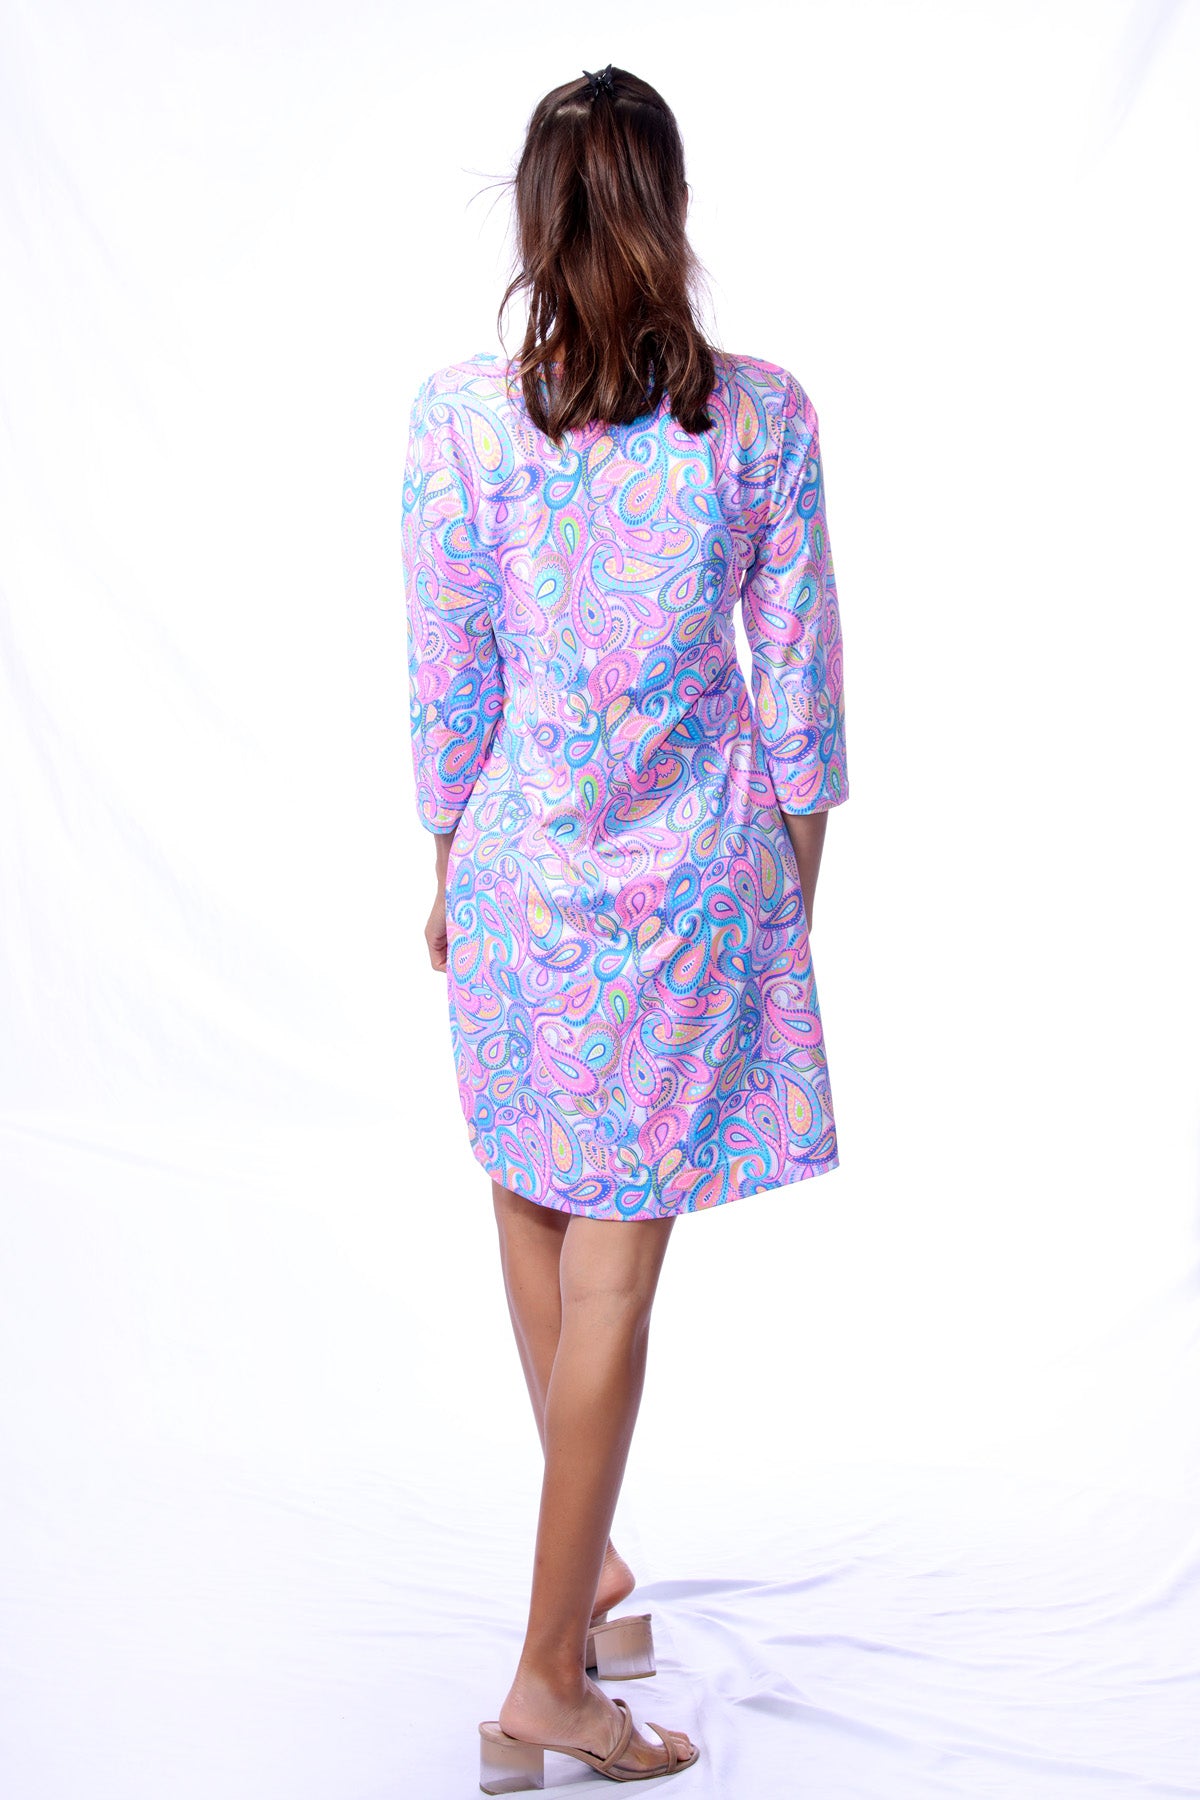 Lulu B Blue/Pink Keyhole Top – Modern Dress